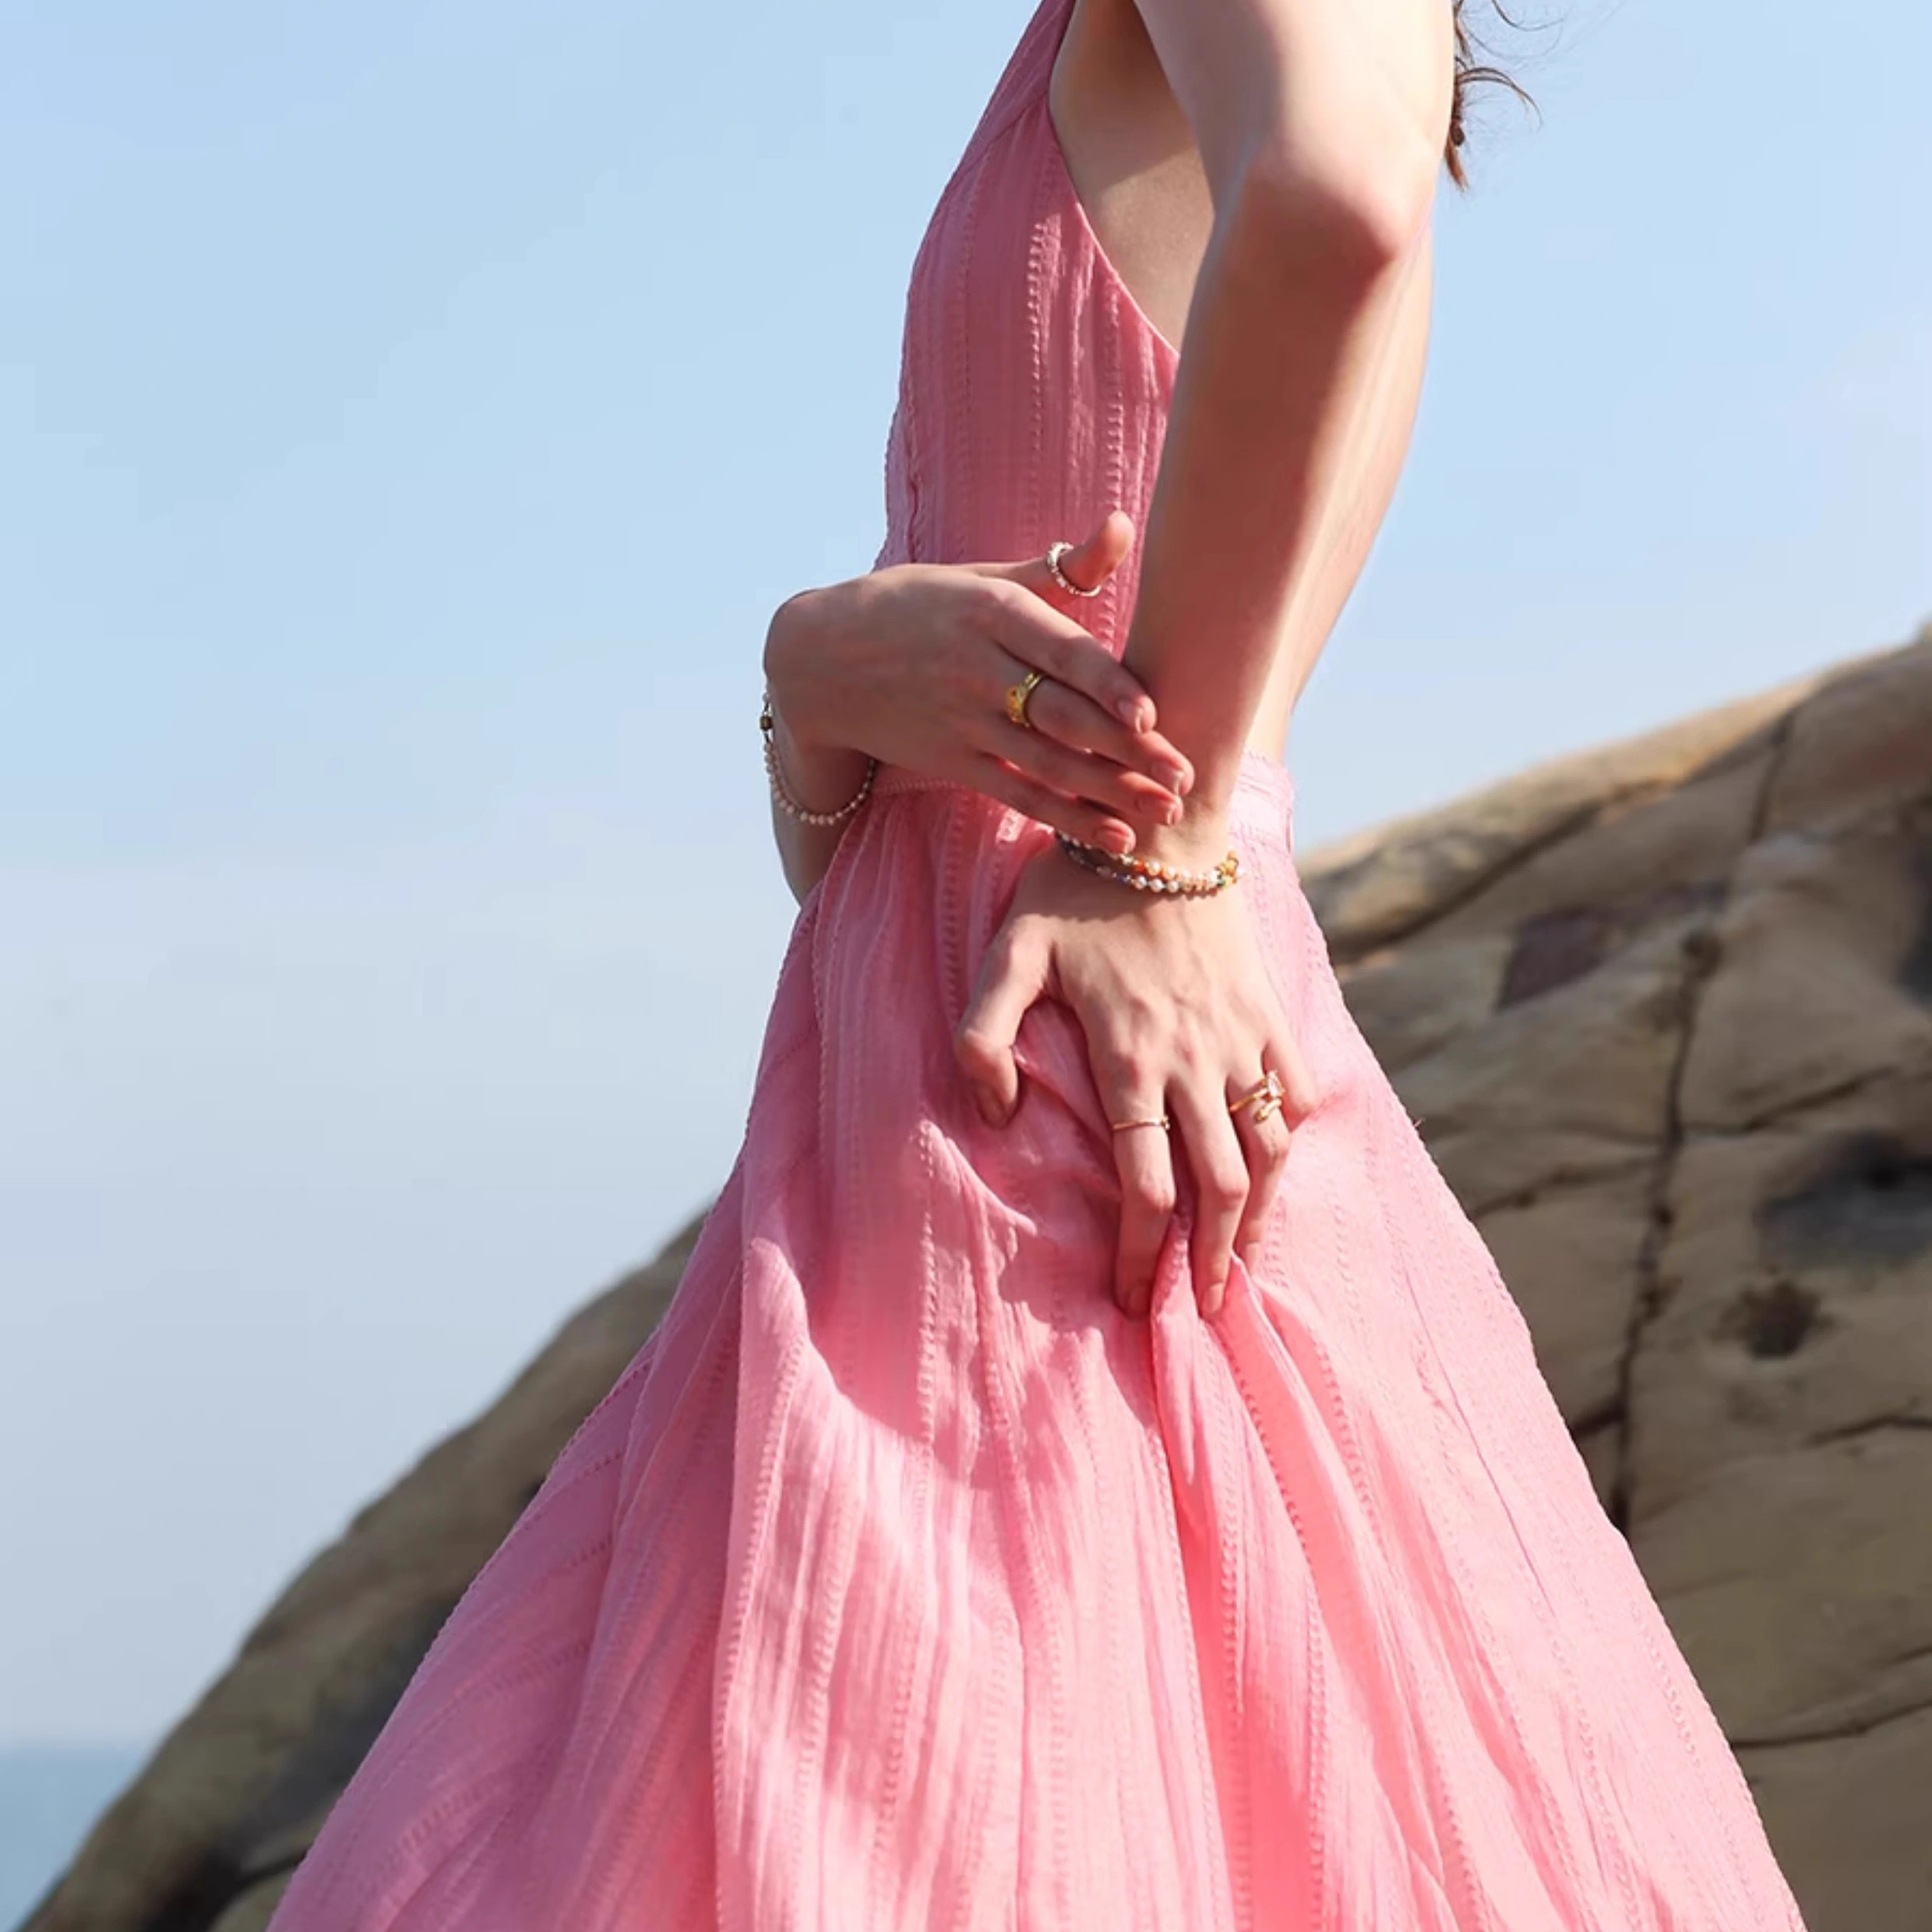 Customized Fabric Pink Chiffon Halter Long Dresses for Women (1)